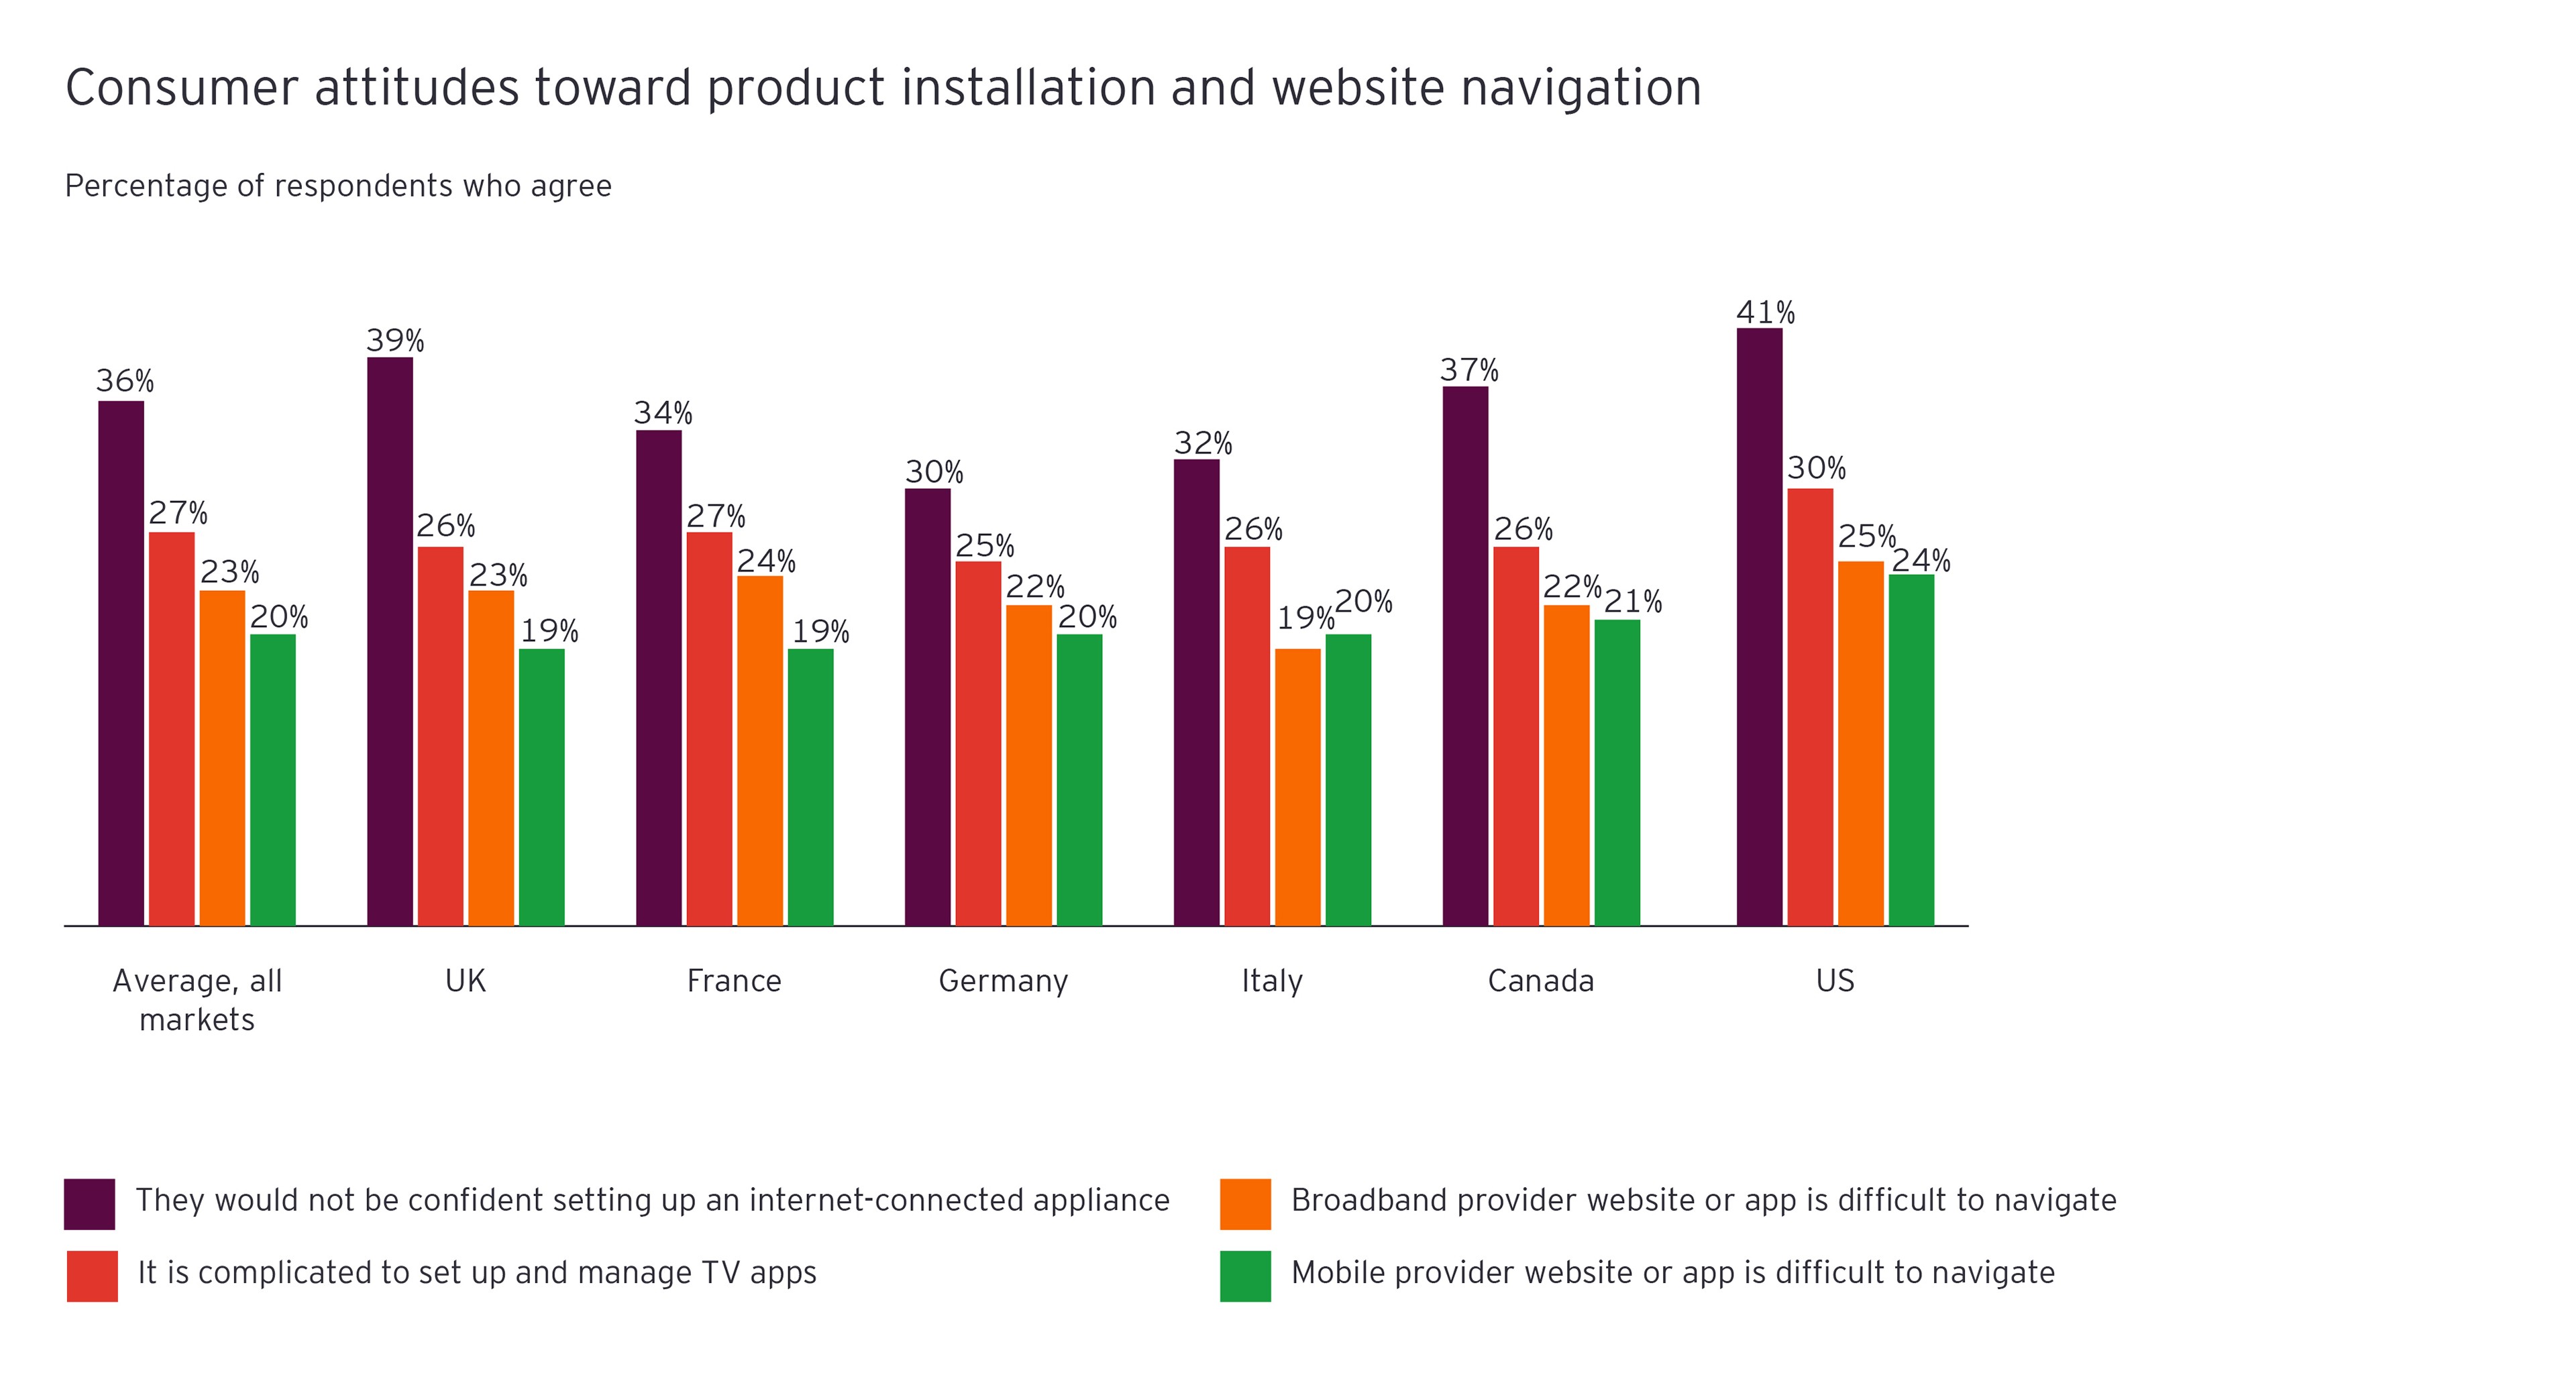 Figure 4: Consumer attitudes toward product installation and website navigation